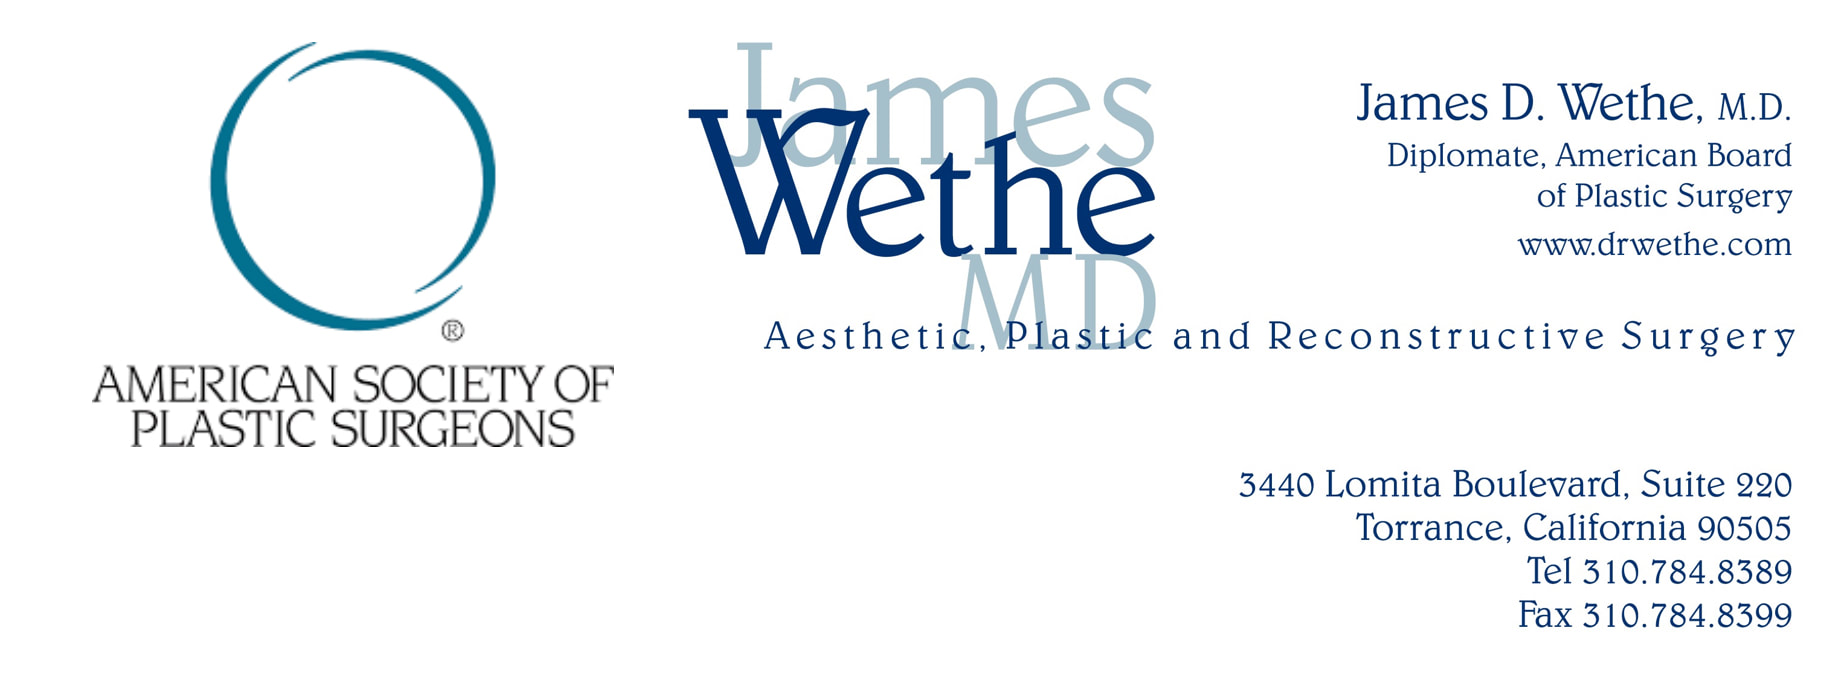 James D Wethe, MD letterhead logo 3440 Lomita Boulevard, Suite 220, Torrance California 90505 Tel. 310-784-8389, Fax. 310-784-8399; Diplomate American Board of Plastic Surgery, wwww.drwethe.com